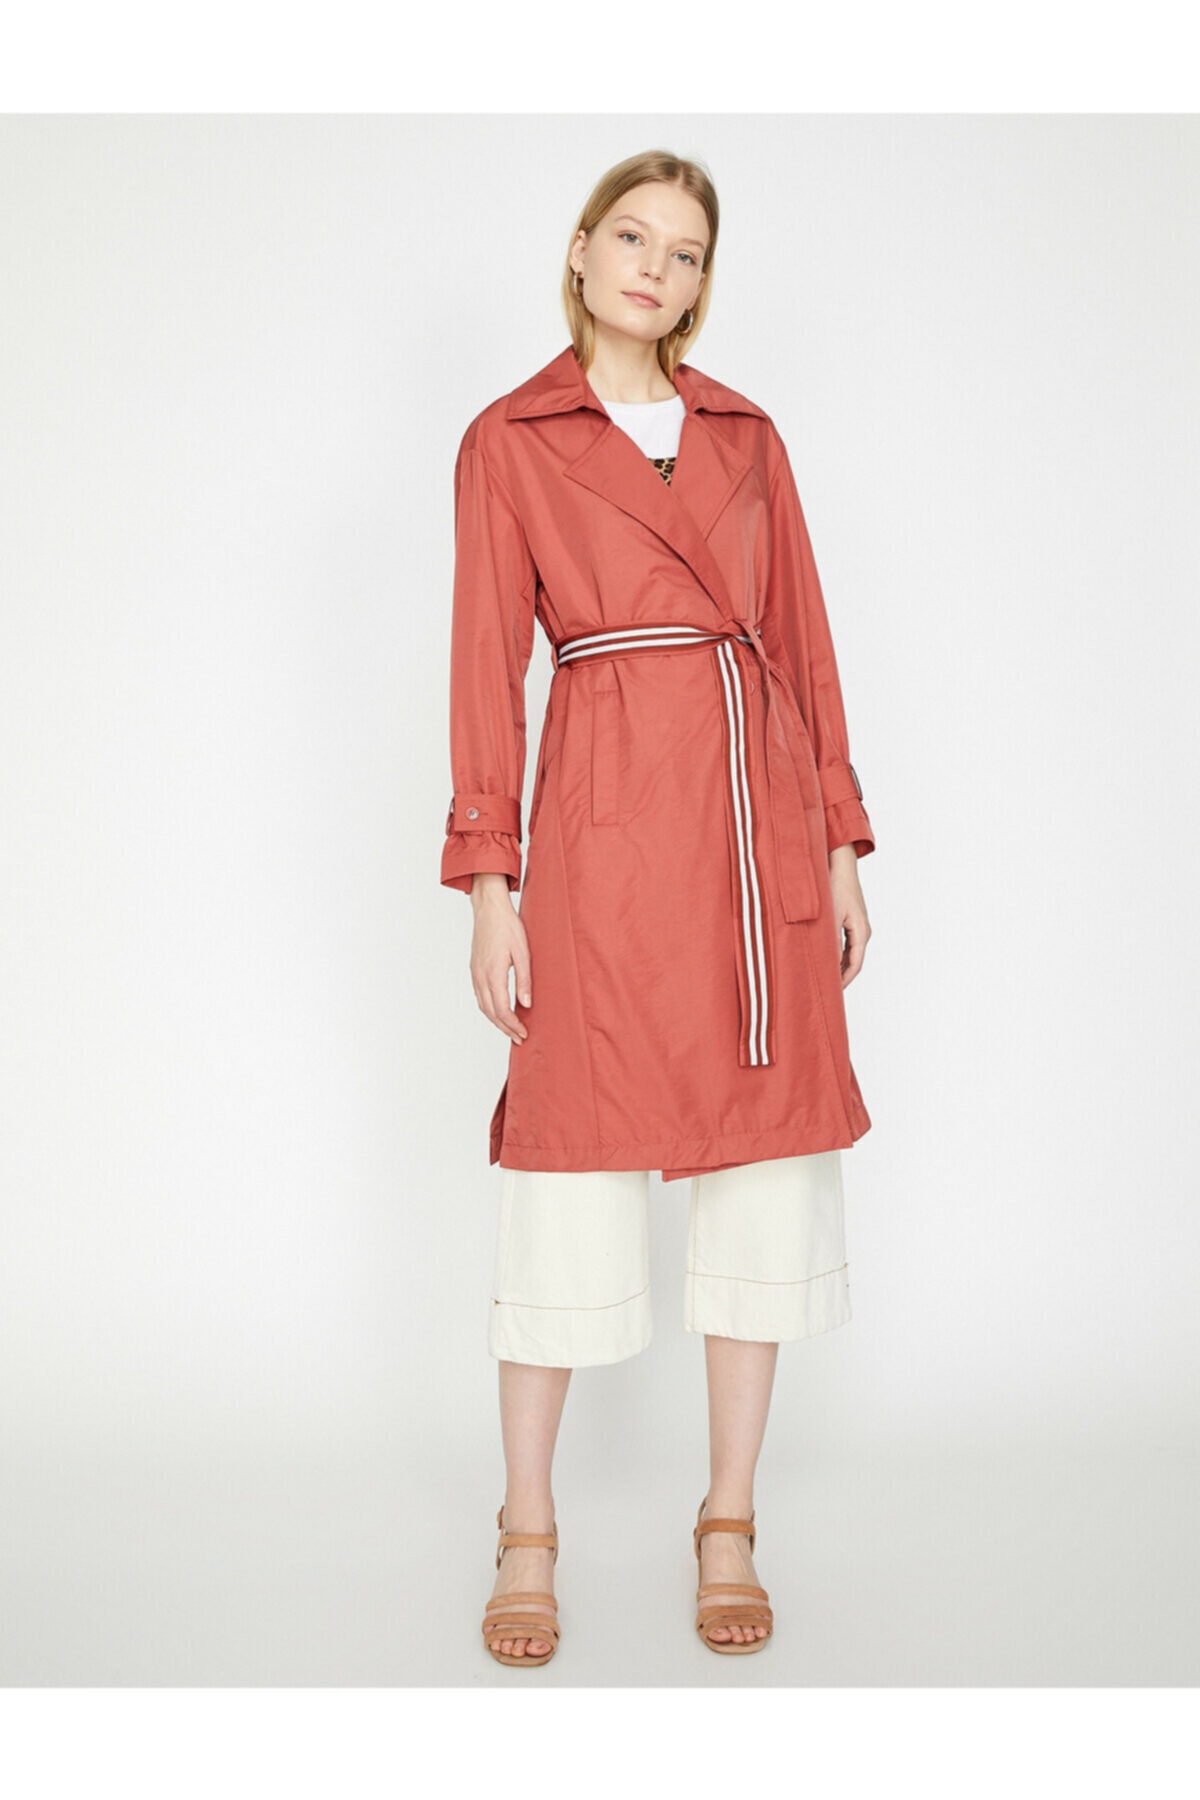 Koton Women's Red Trench Coat